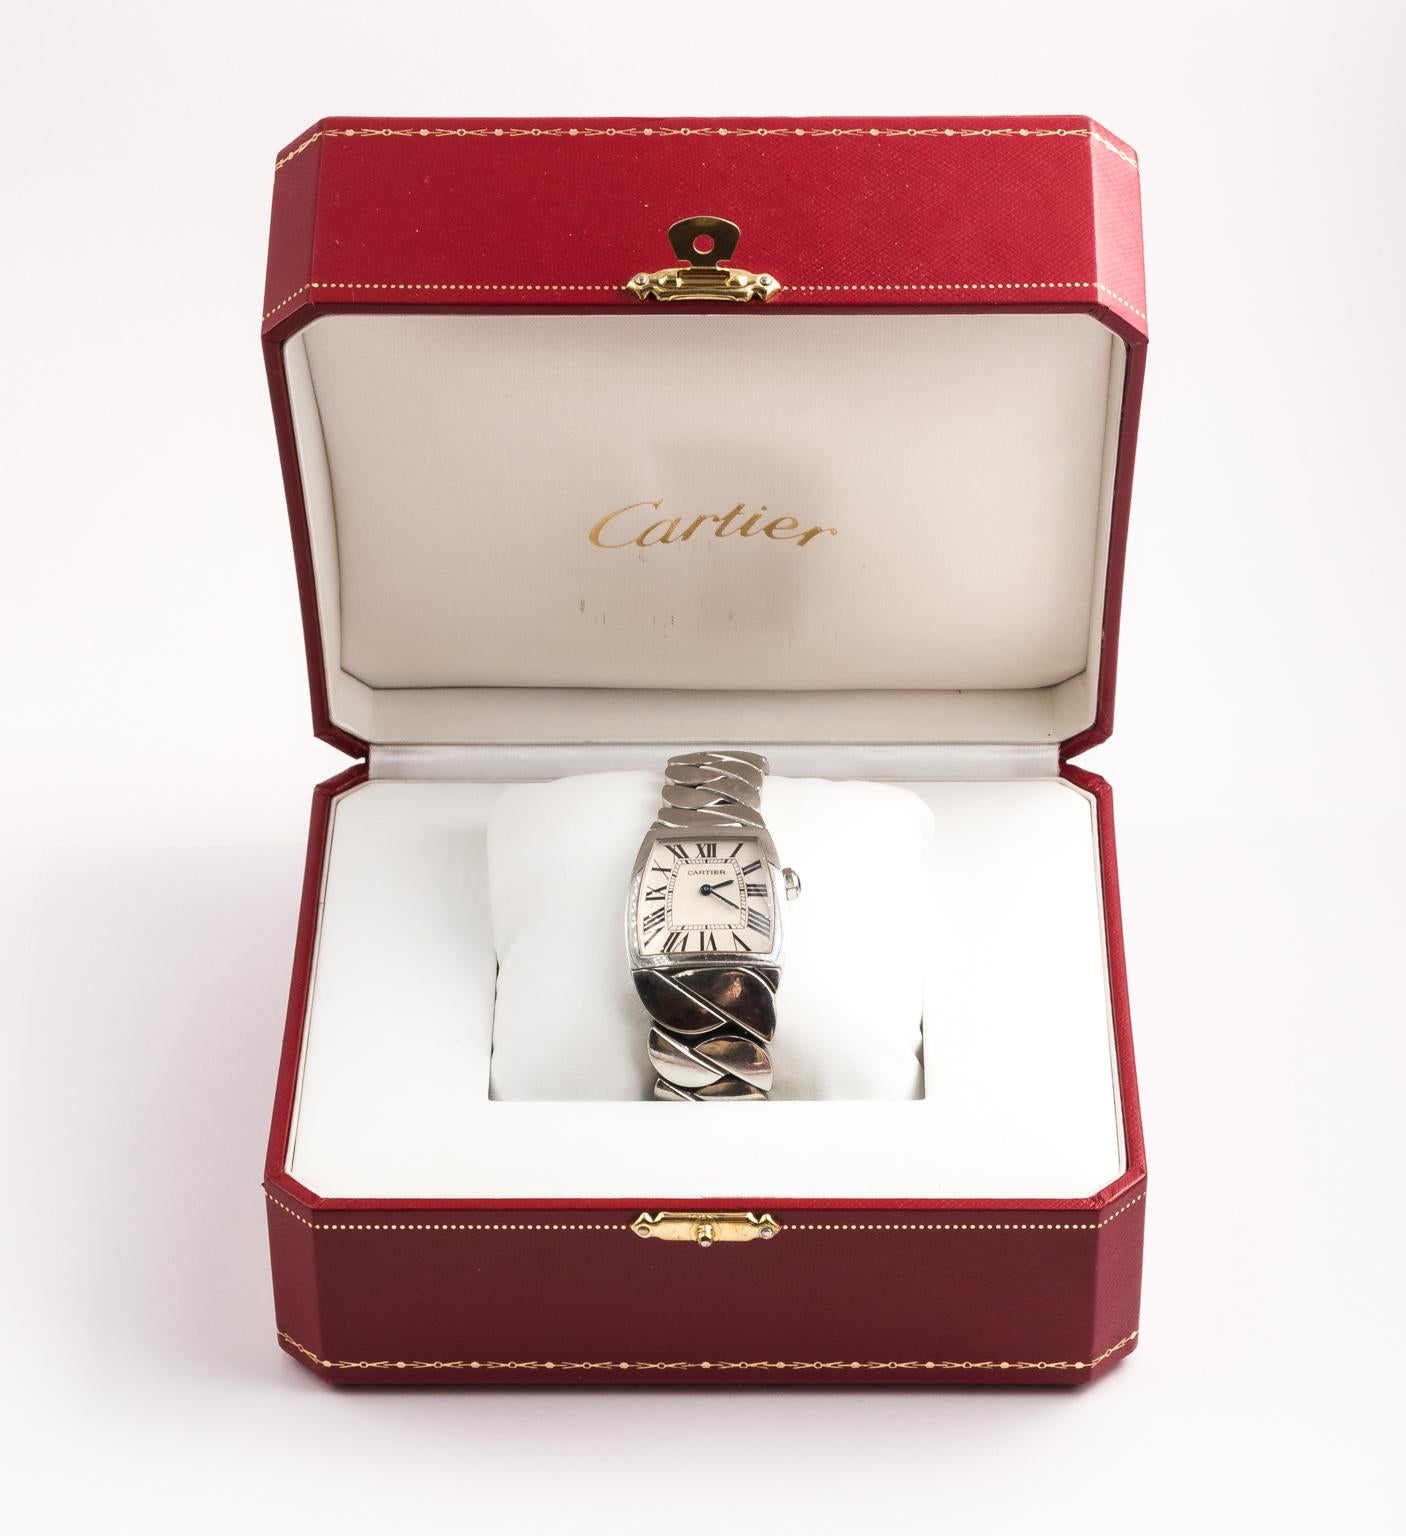 Cartier La Dona Stainless Steel Watch 5